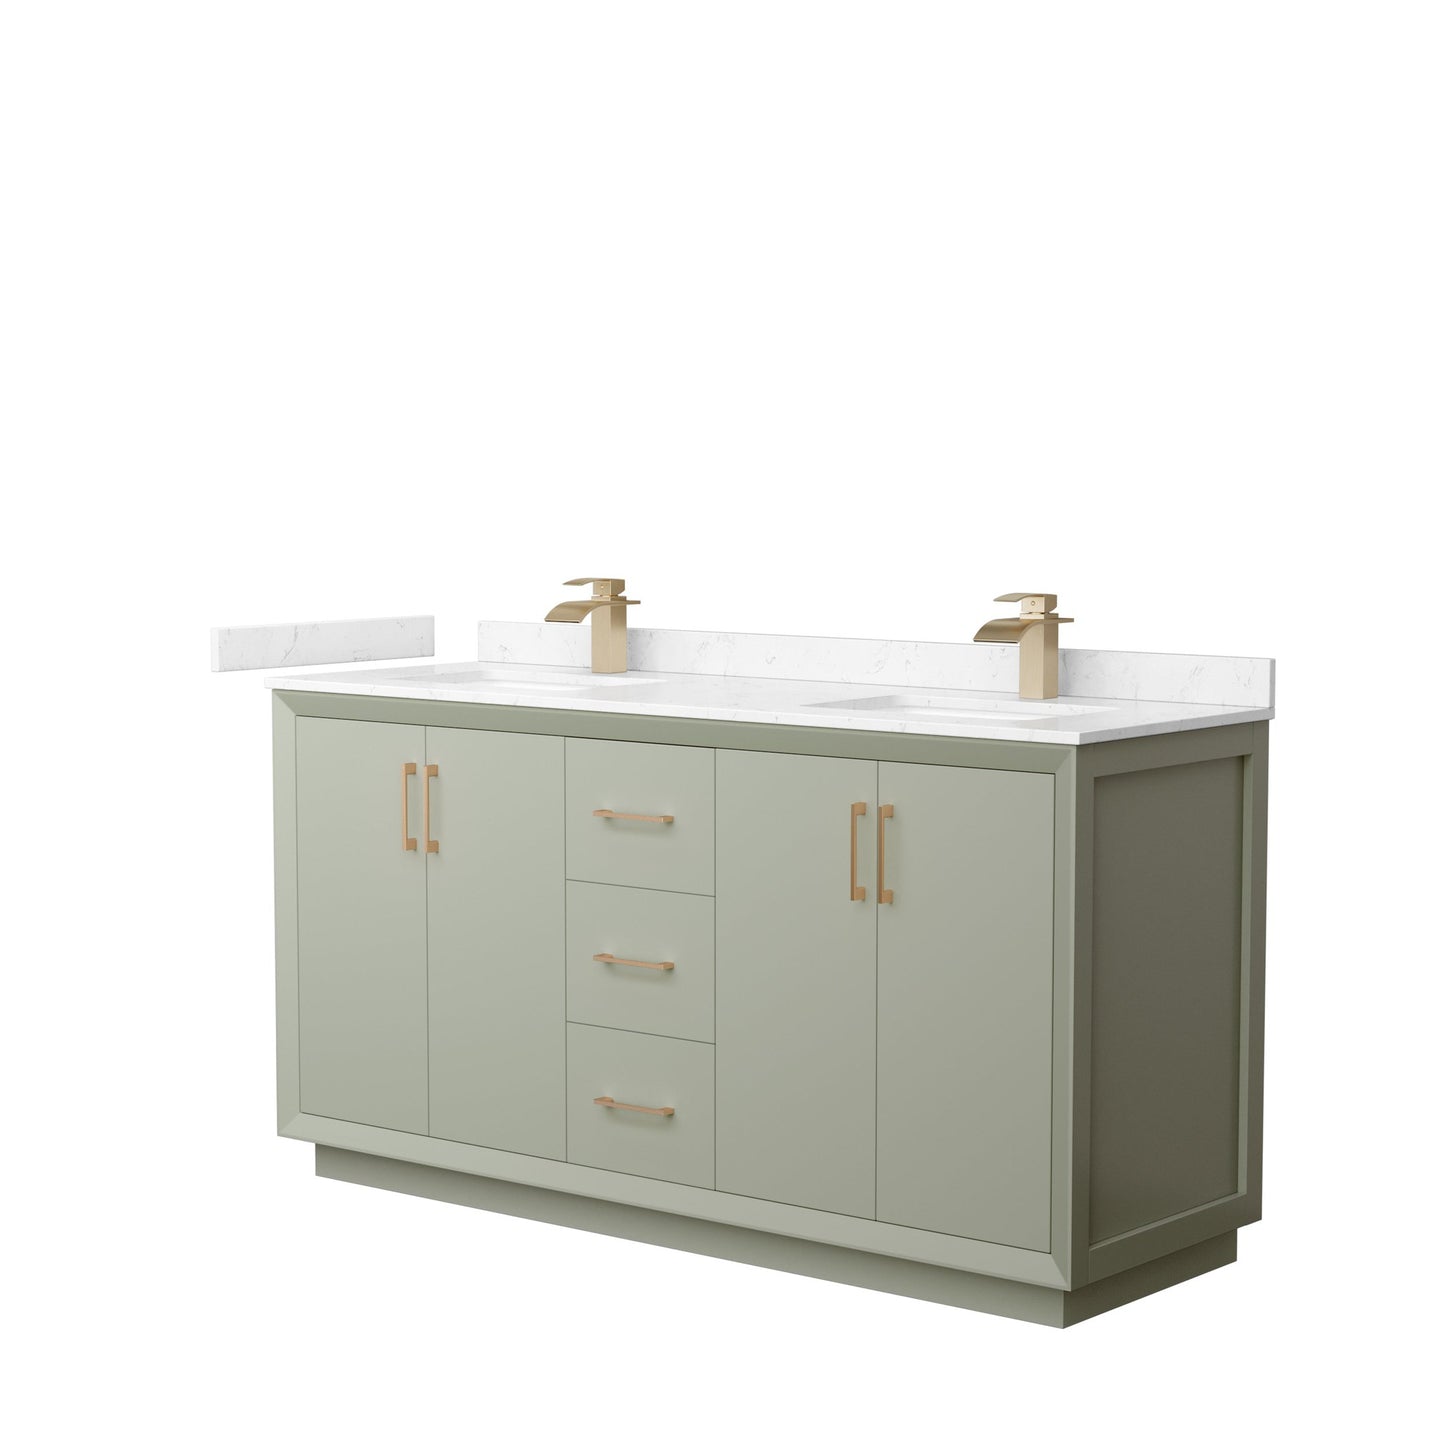 Wyndham Collection Strada 66" Double Bathroom Vanity in Light Green, Carrara Cultured Marble Countertop, Undermount Square Sinks, Satin Bronze Trim